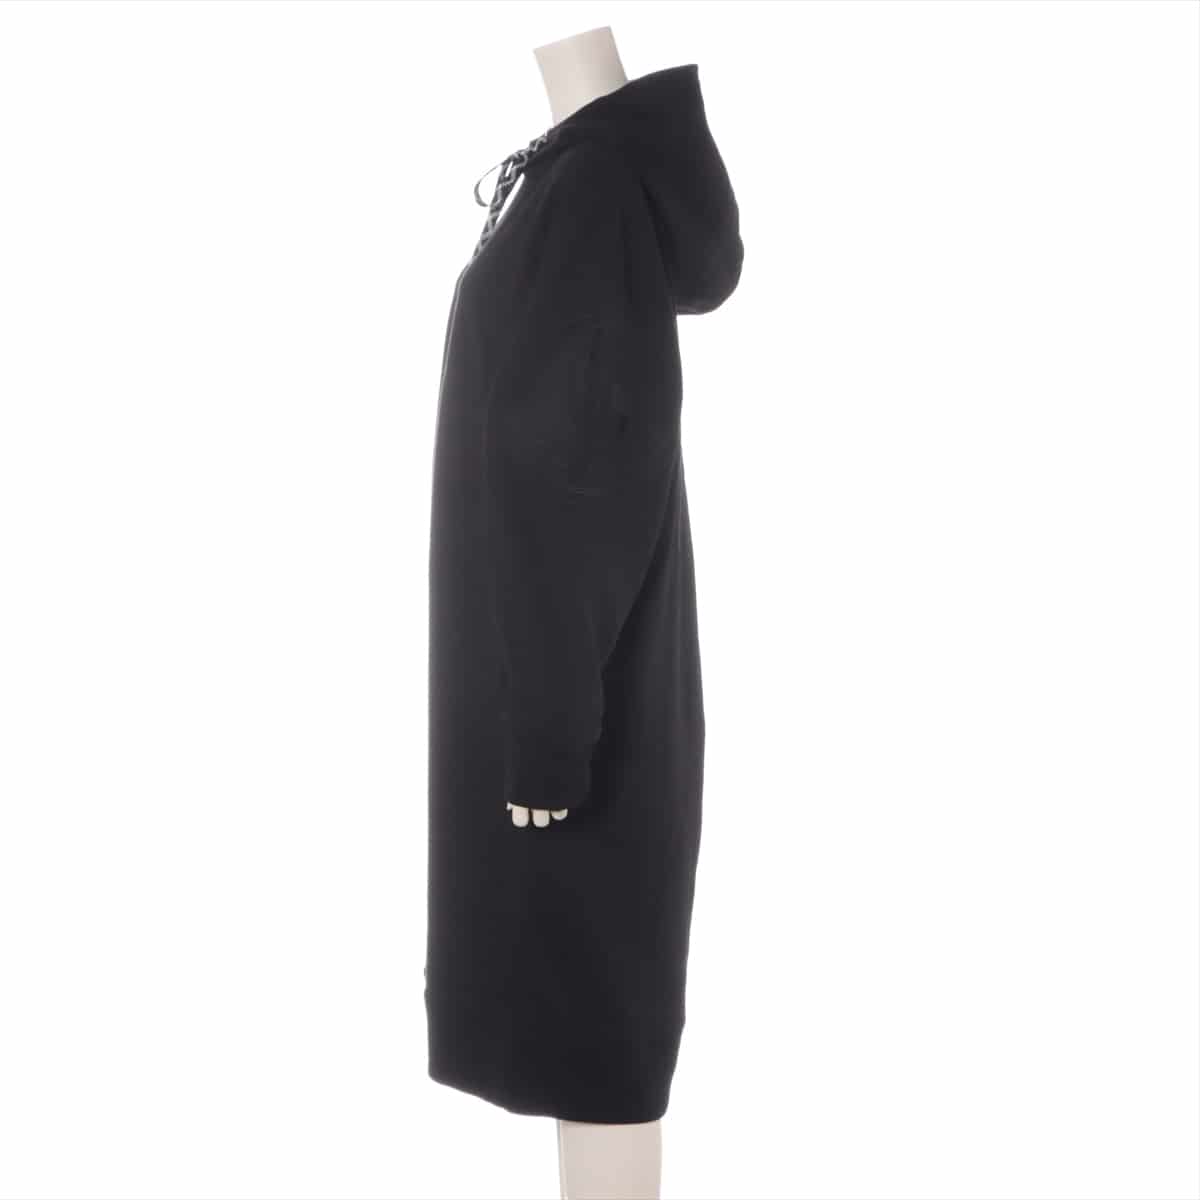 Moncler ABITO 20 years Cotton & nylon Dress L Ladies' Black